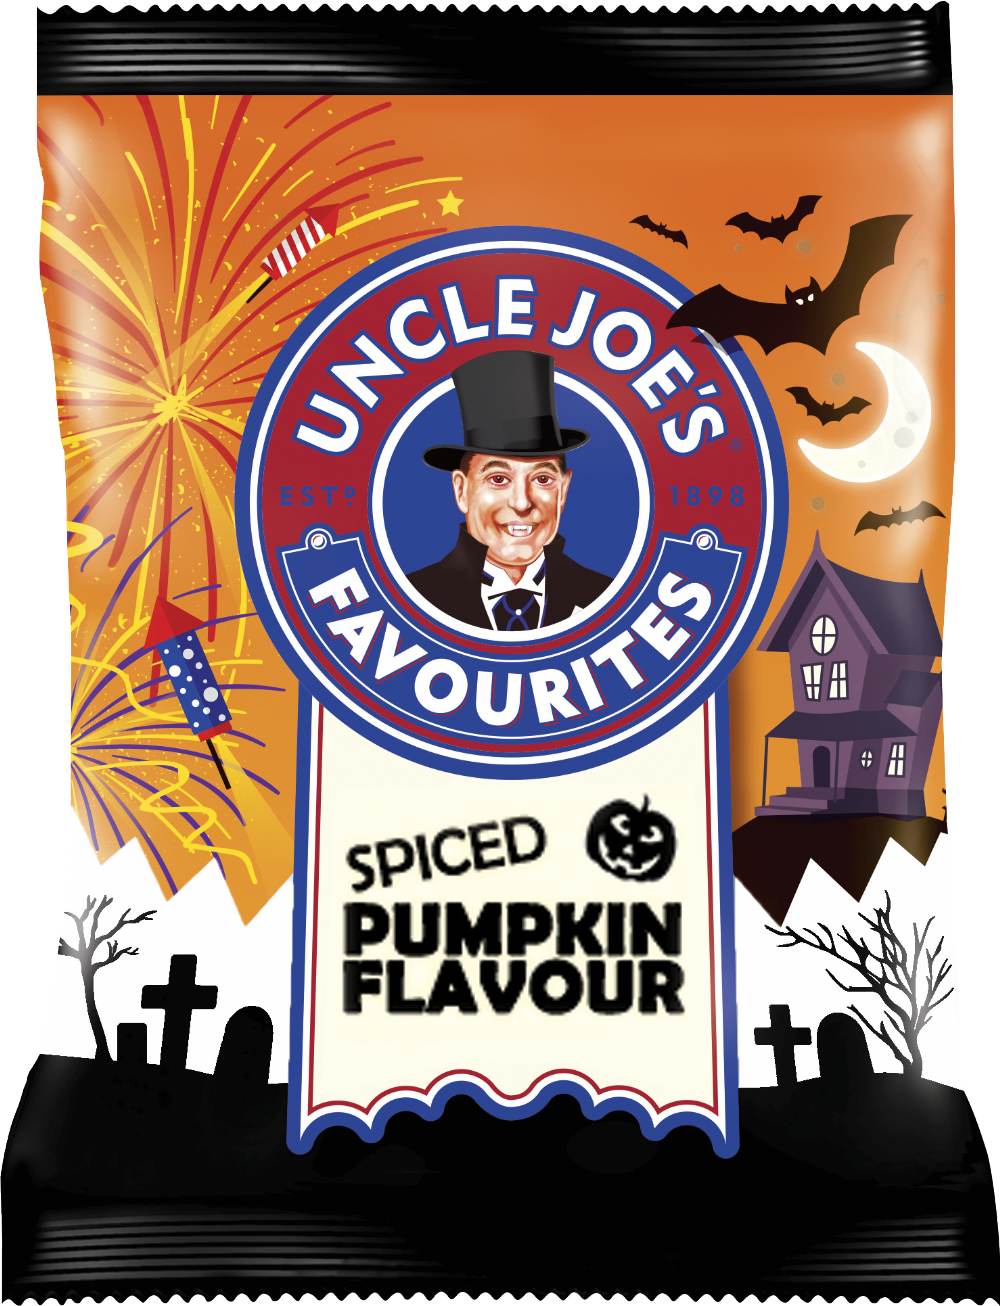 UNCLE JOE'S Spiced Pumpkin Flavour Sweets 75g